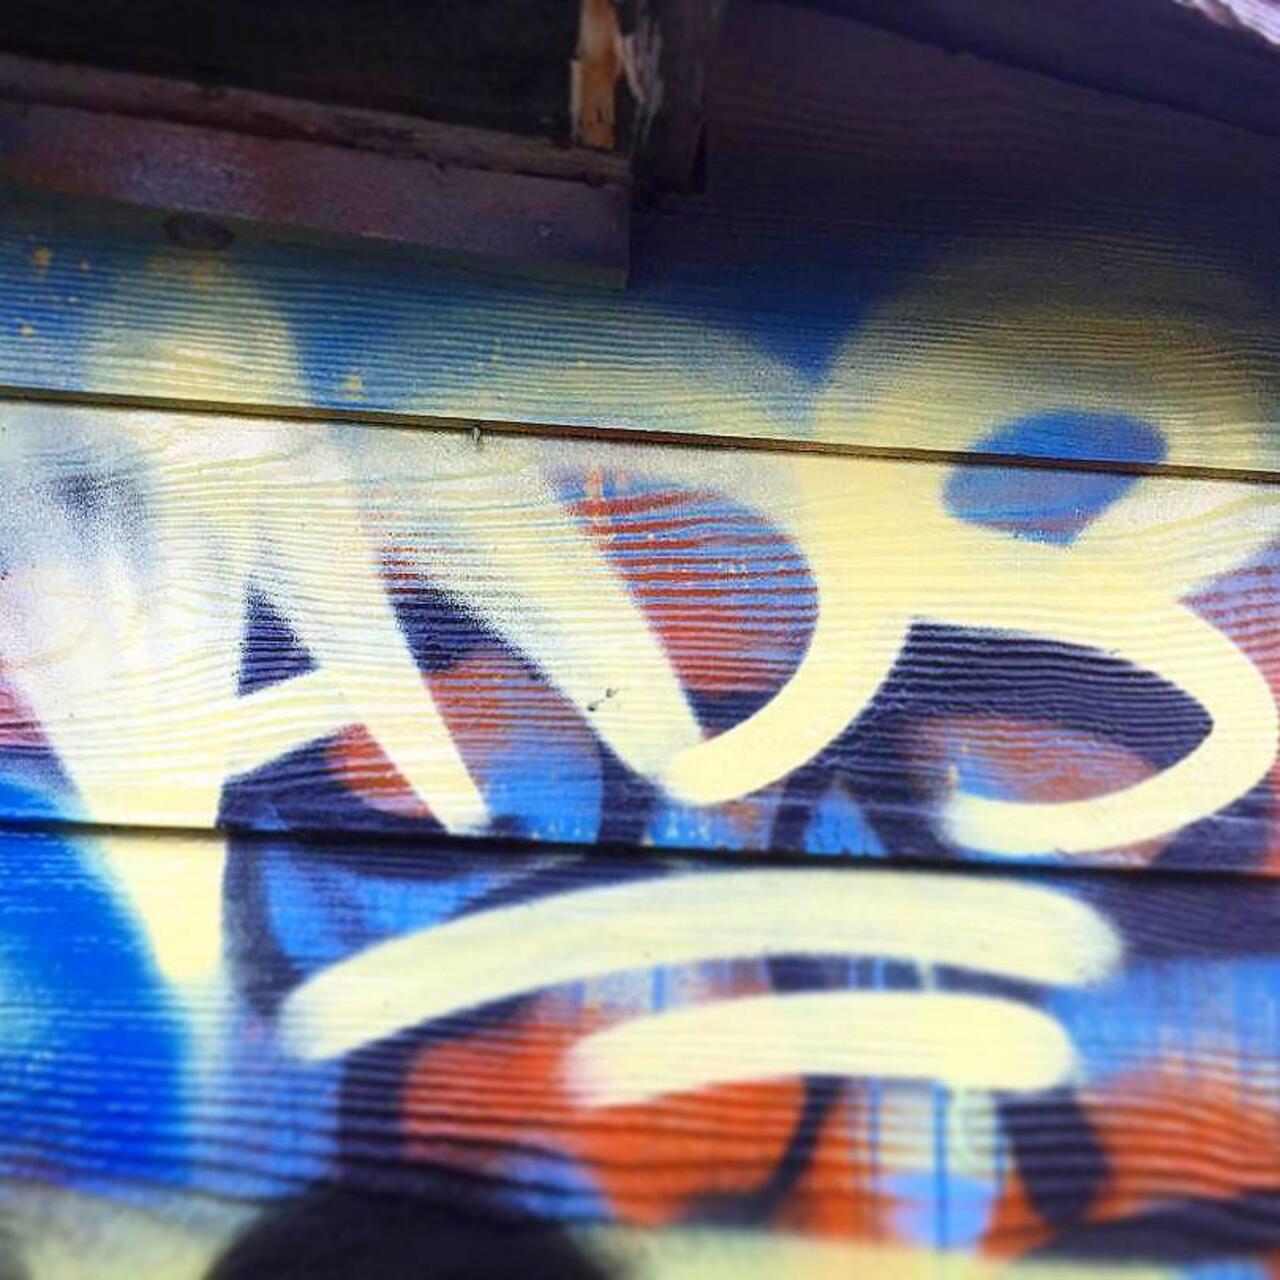 RT @artpushr: via #_adskult_ "http://bit.ly/1G2iiZD" #graffiti #streetart http://t.co/r1kbMBaG5S